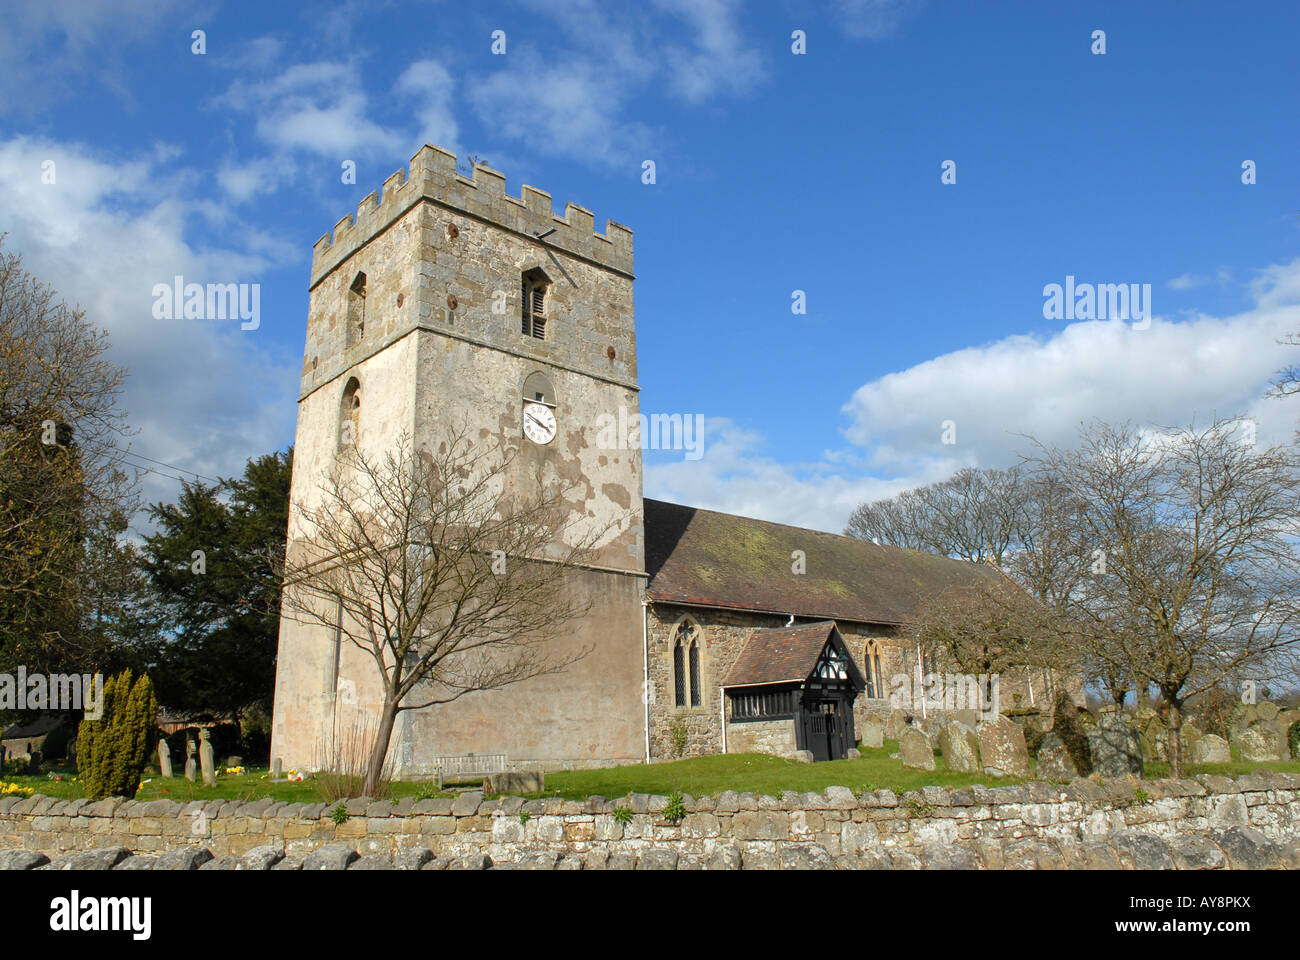 La iglesia de la aldea en Cardington, cerca de Church Stretton en Shropshire, Inglaterra Foto de stock